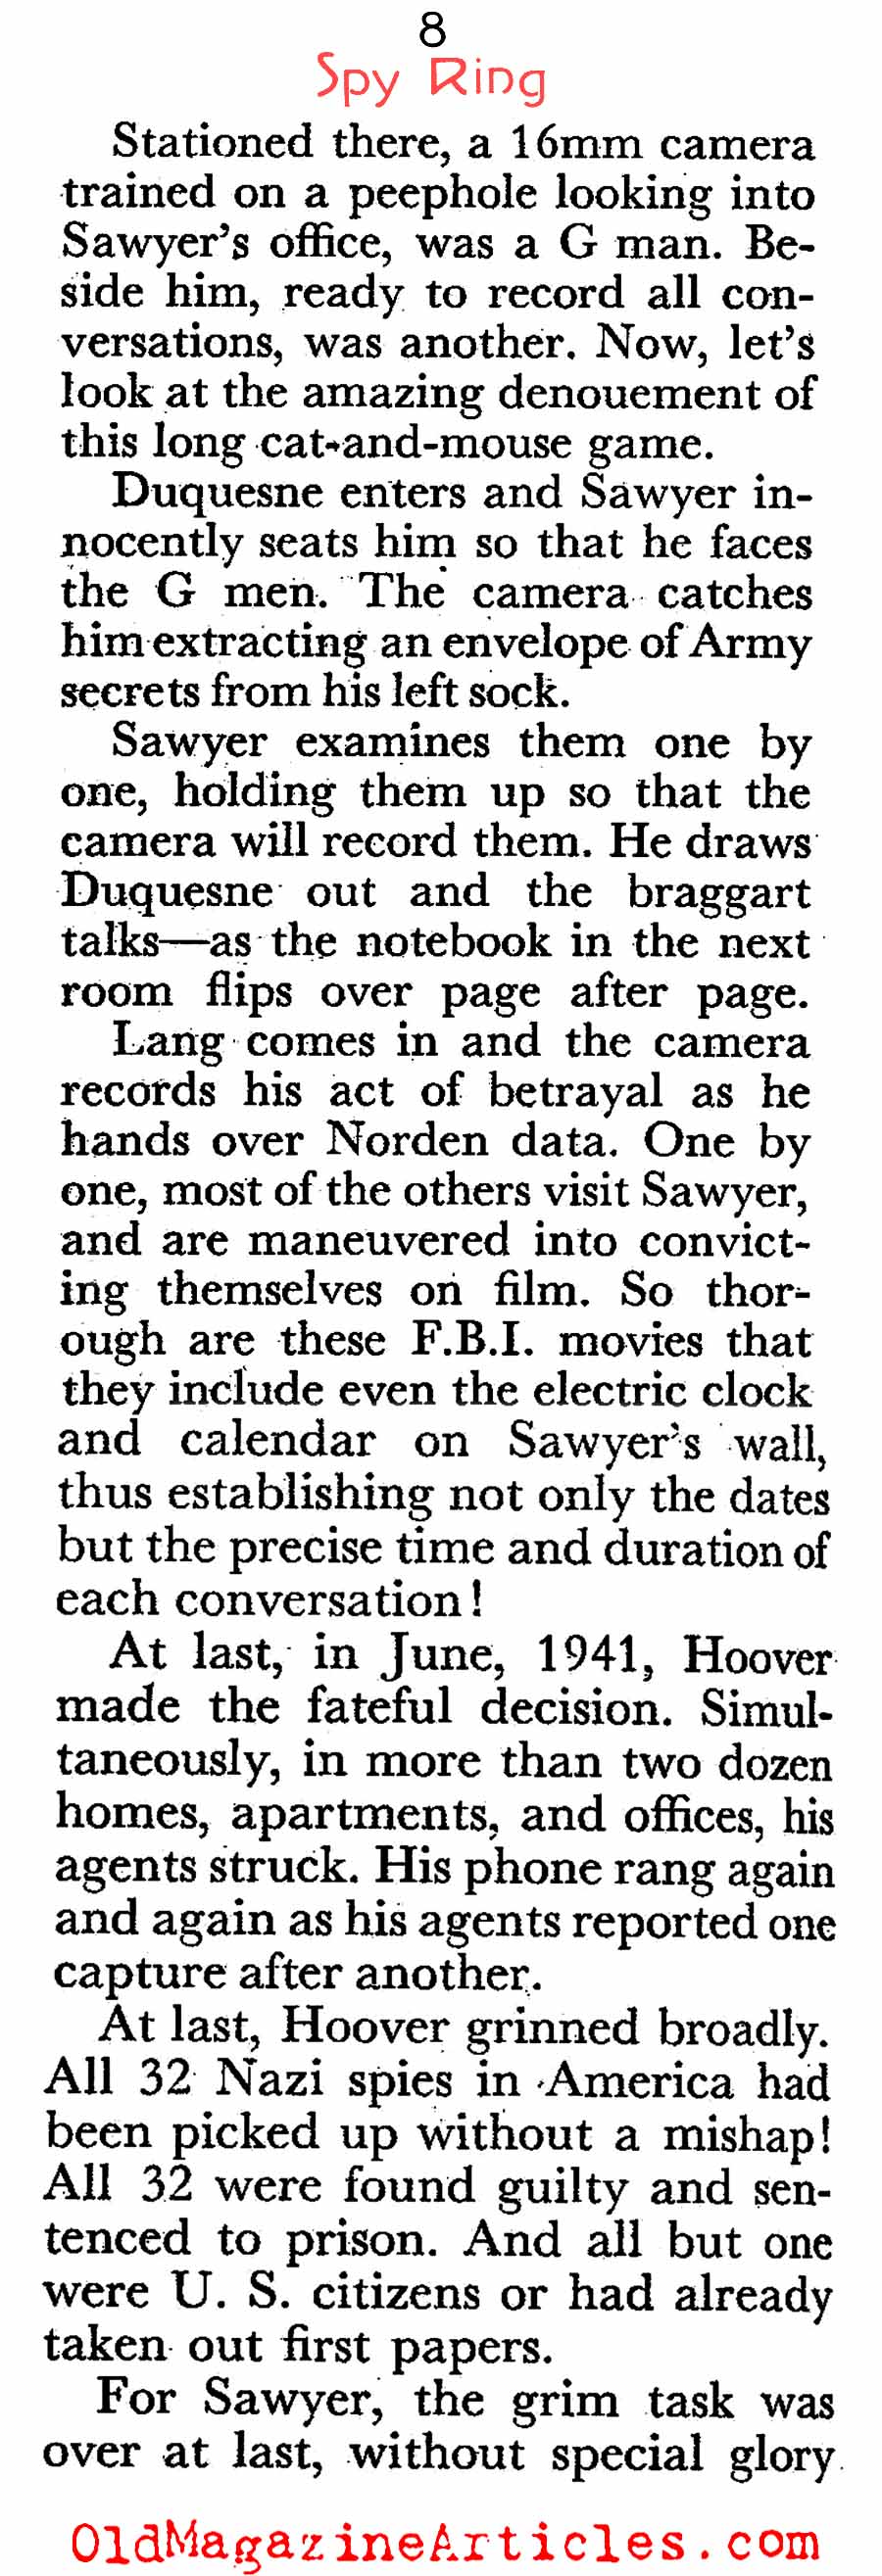 Counter-Espionage (Coronet Magazine, 1951)